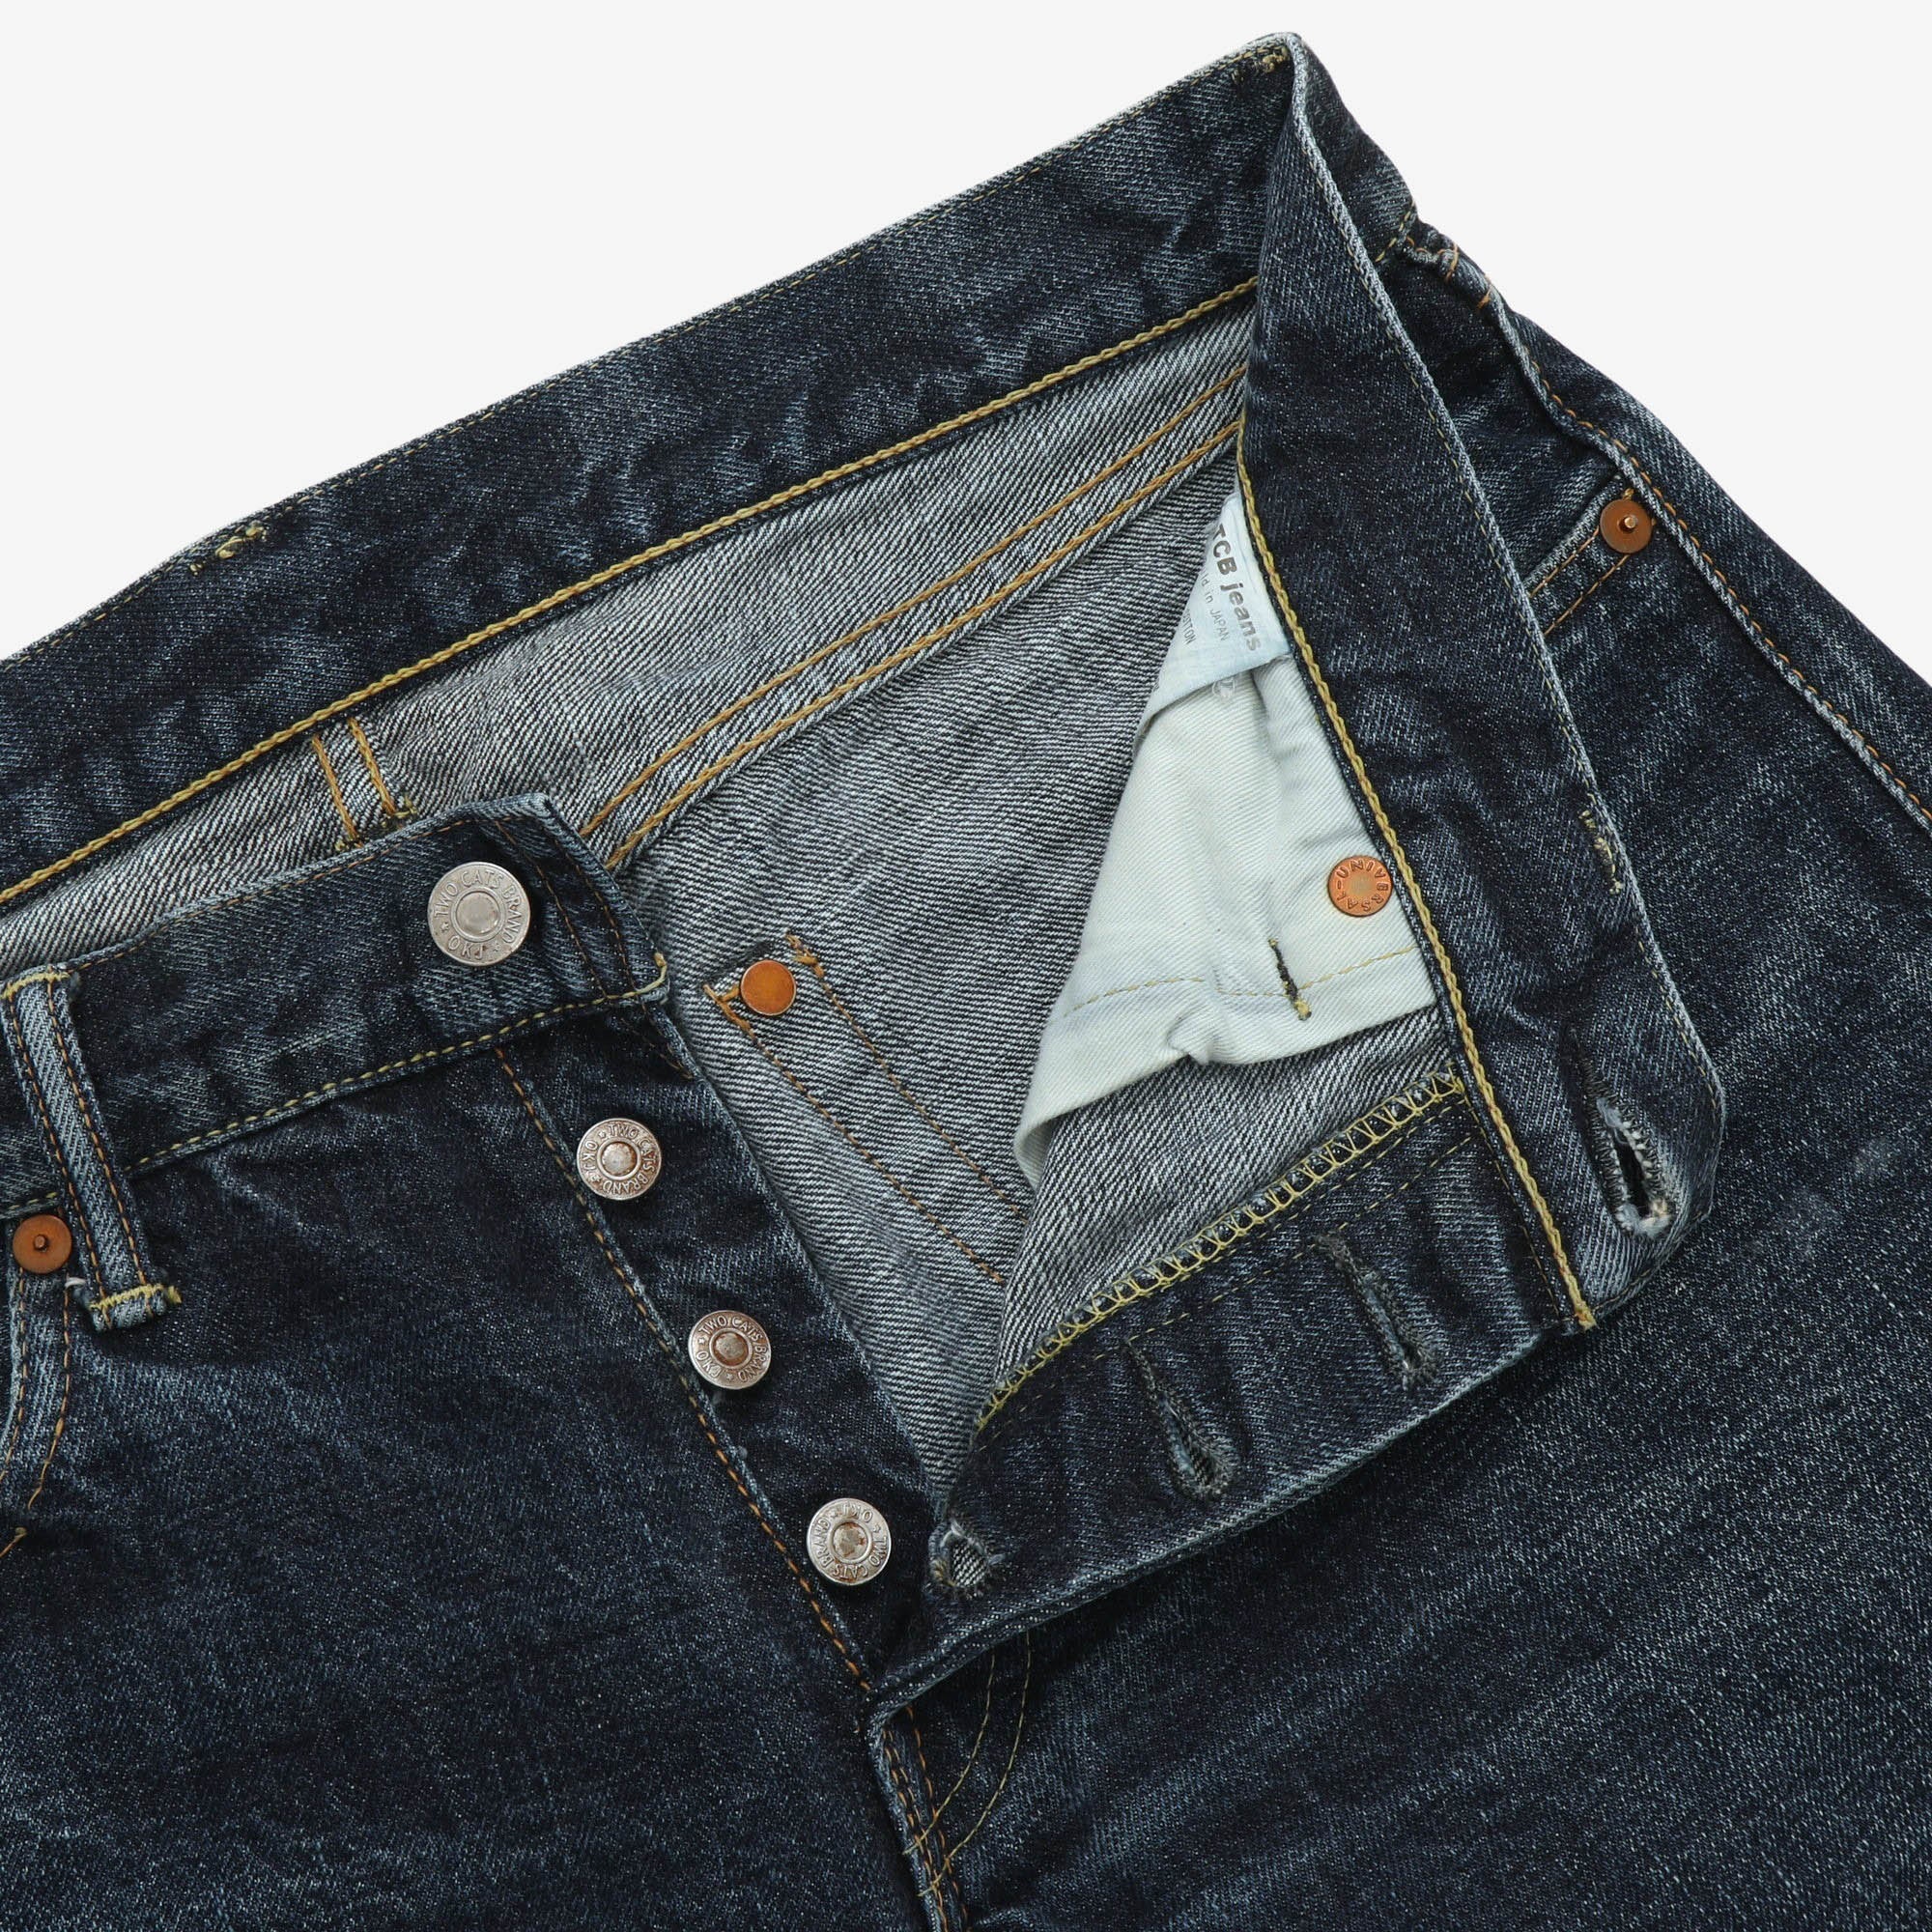 50s Slim Jeans (30x29)